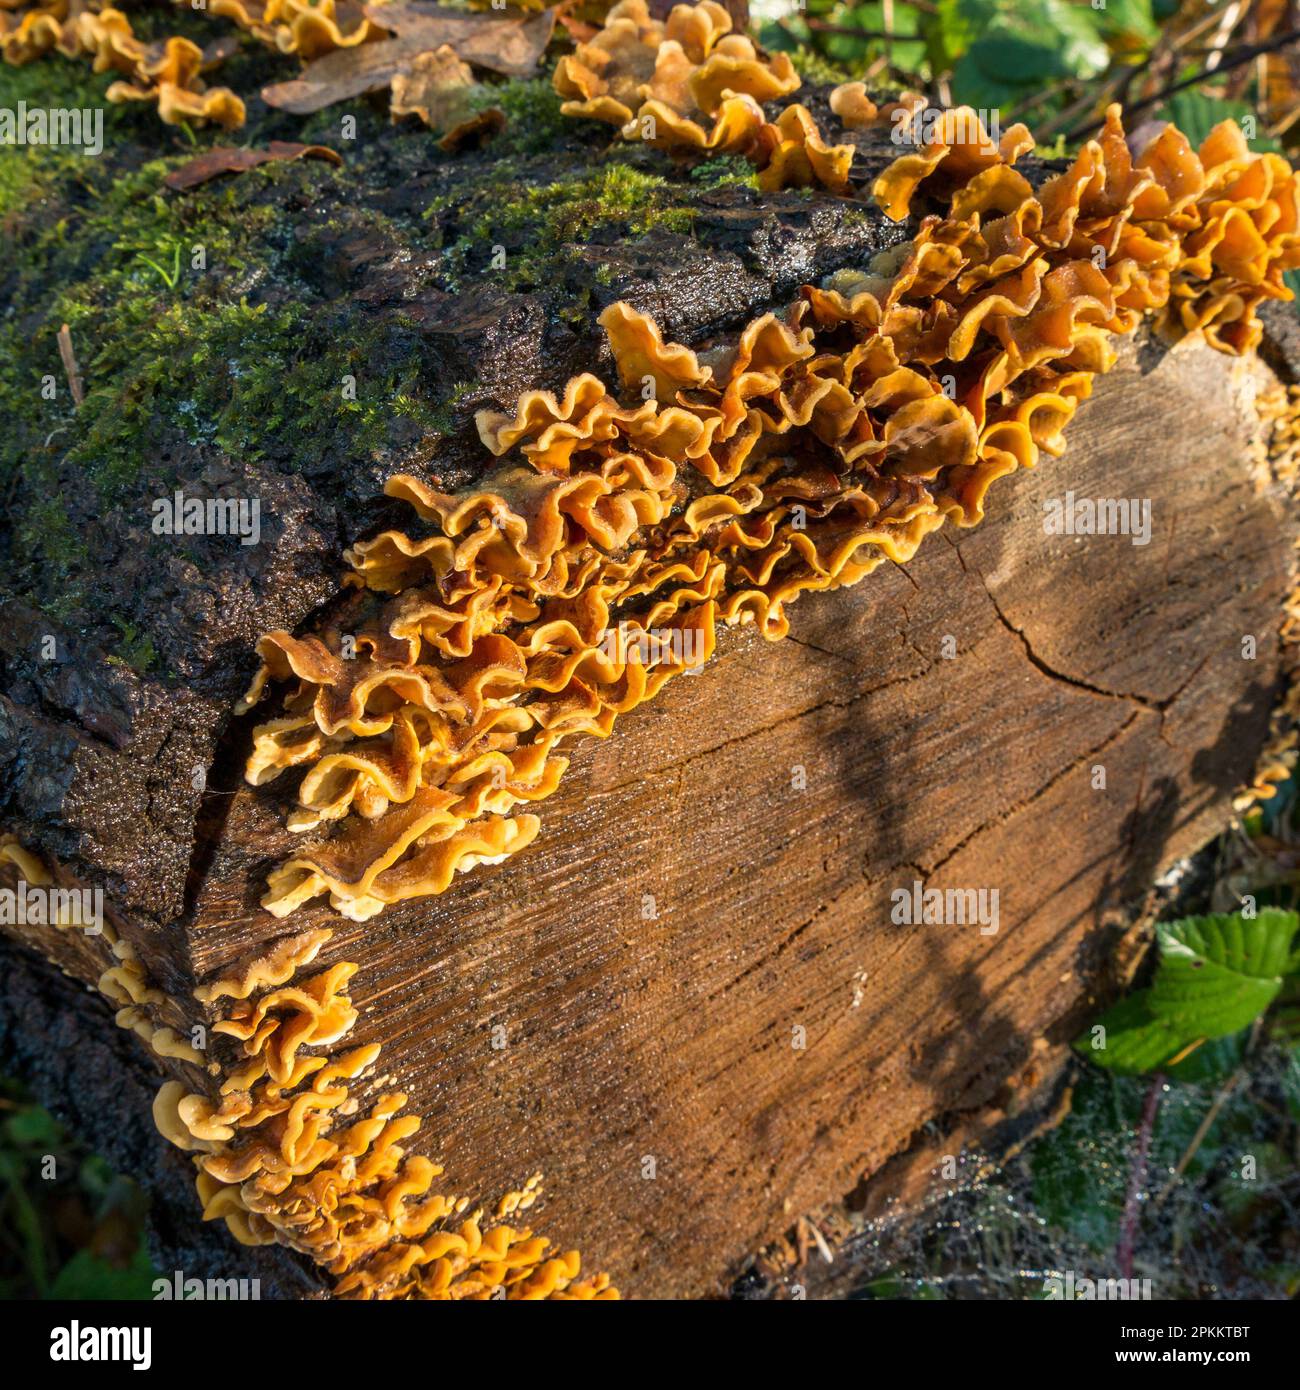 Hairy Curtain Crust (Stereum hirsutum) bracket fungus growing on dead tree trunk, Cumbria, England, UK Stock Photo